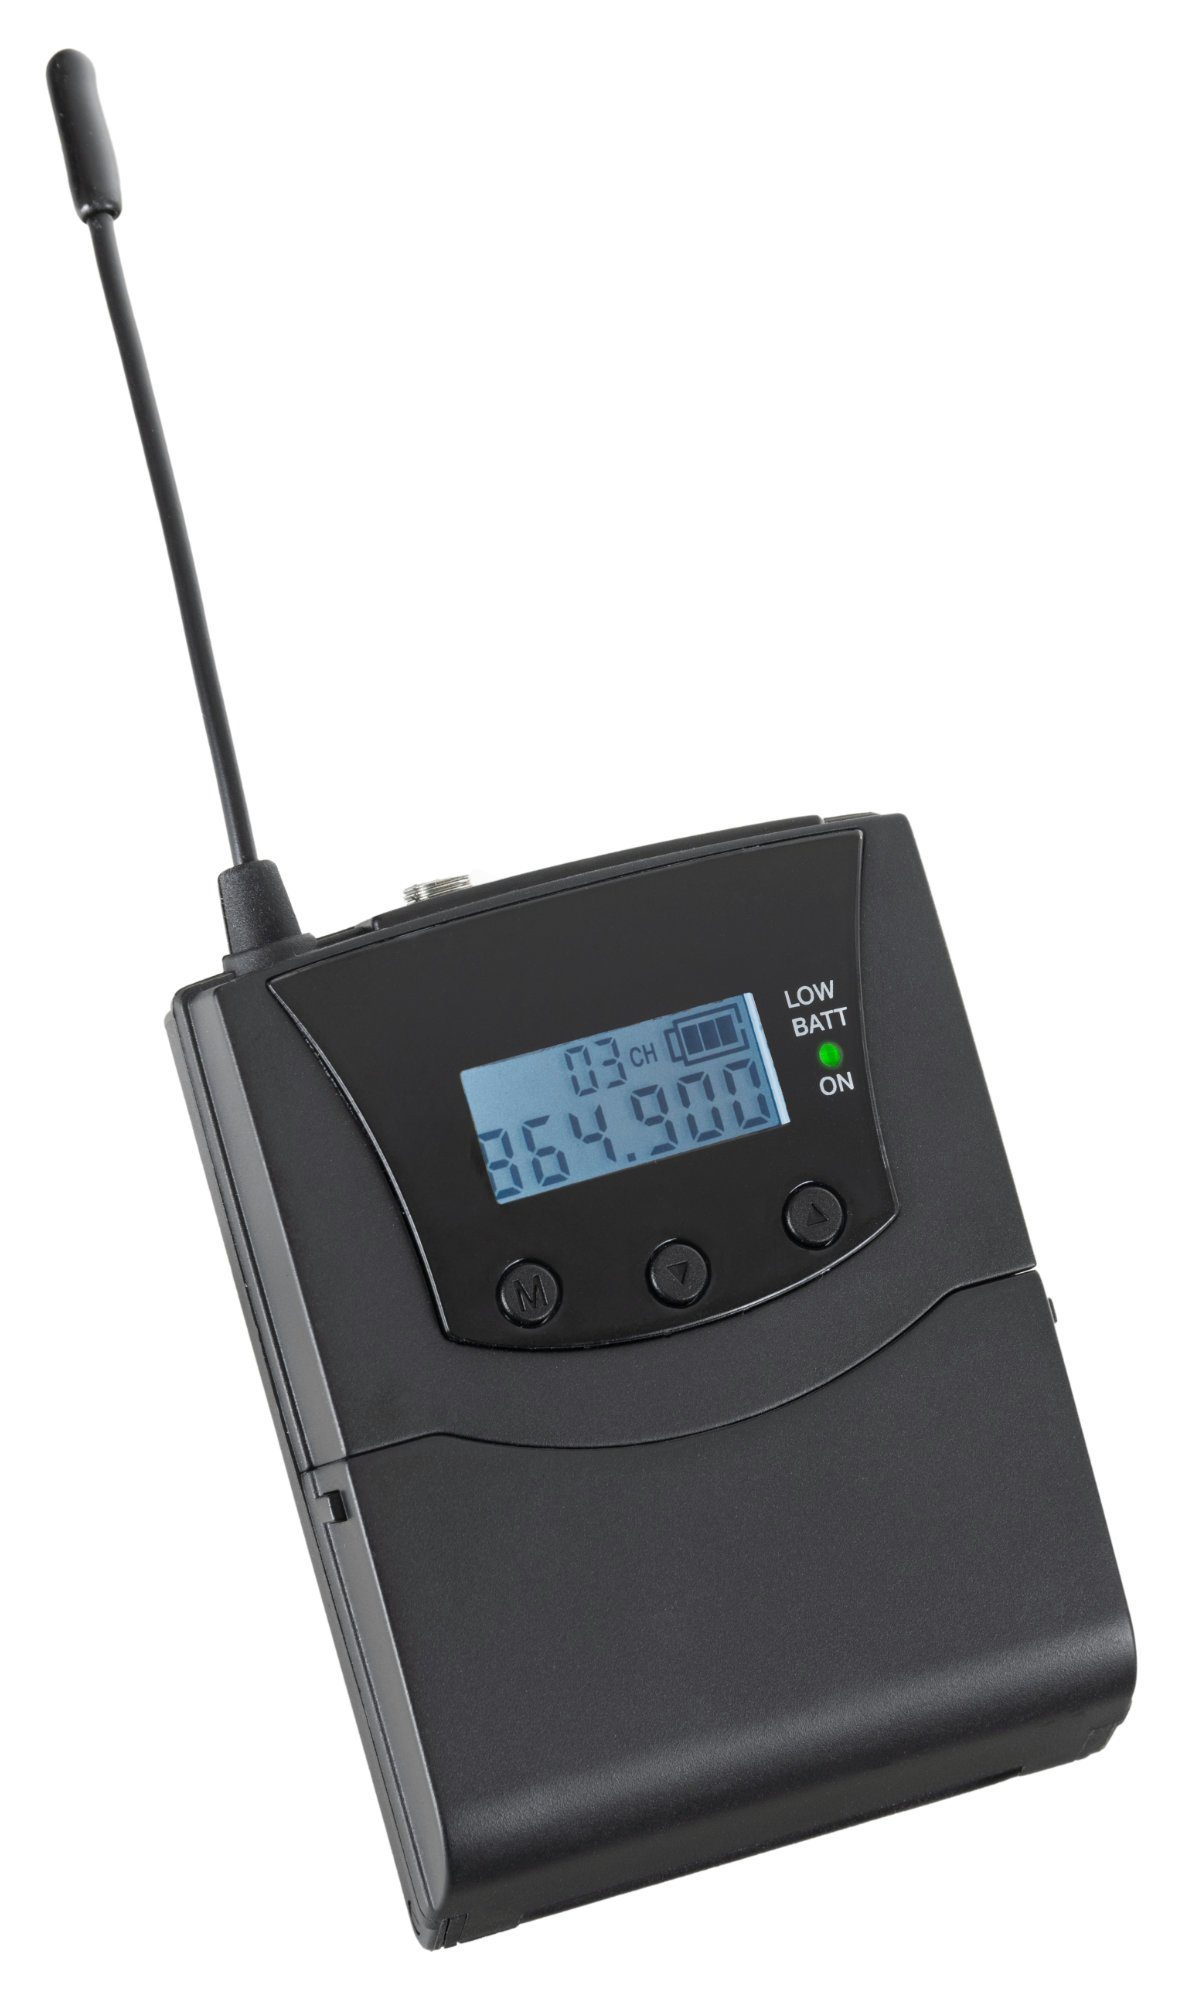 Beatfoxx Silent mit Aux- Transmitter SDT-BP30 Stereo Eingang) Mit Bodypack-Sender (Wireless Mikrofon- 3 V2 und UHF-Technik, Kanäle, Funk-Kopfhörer Guide